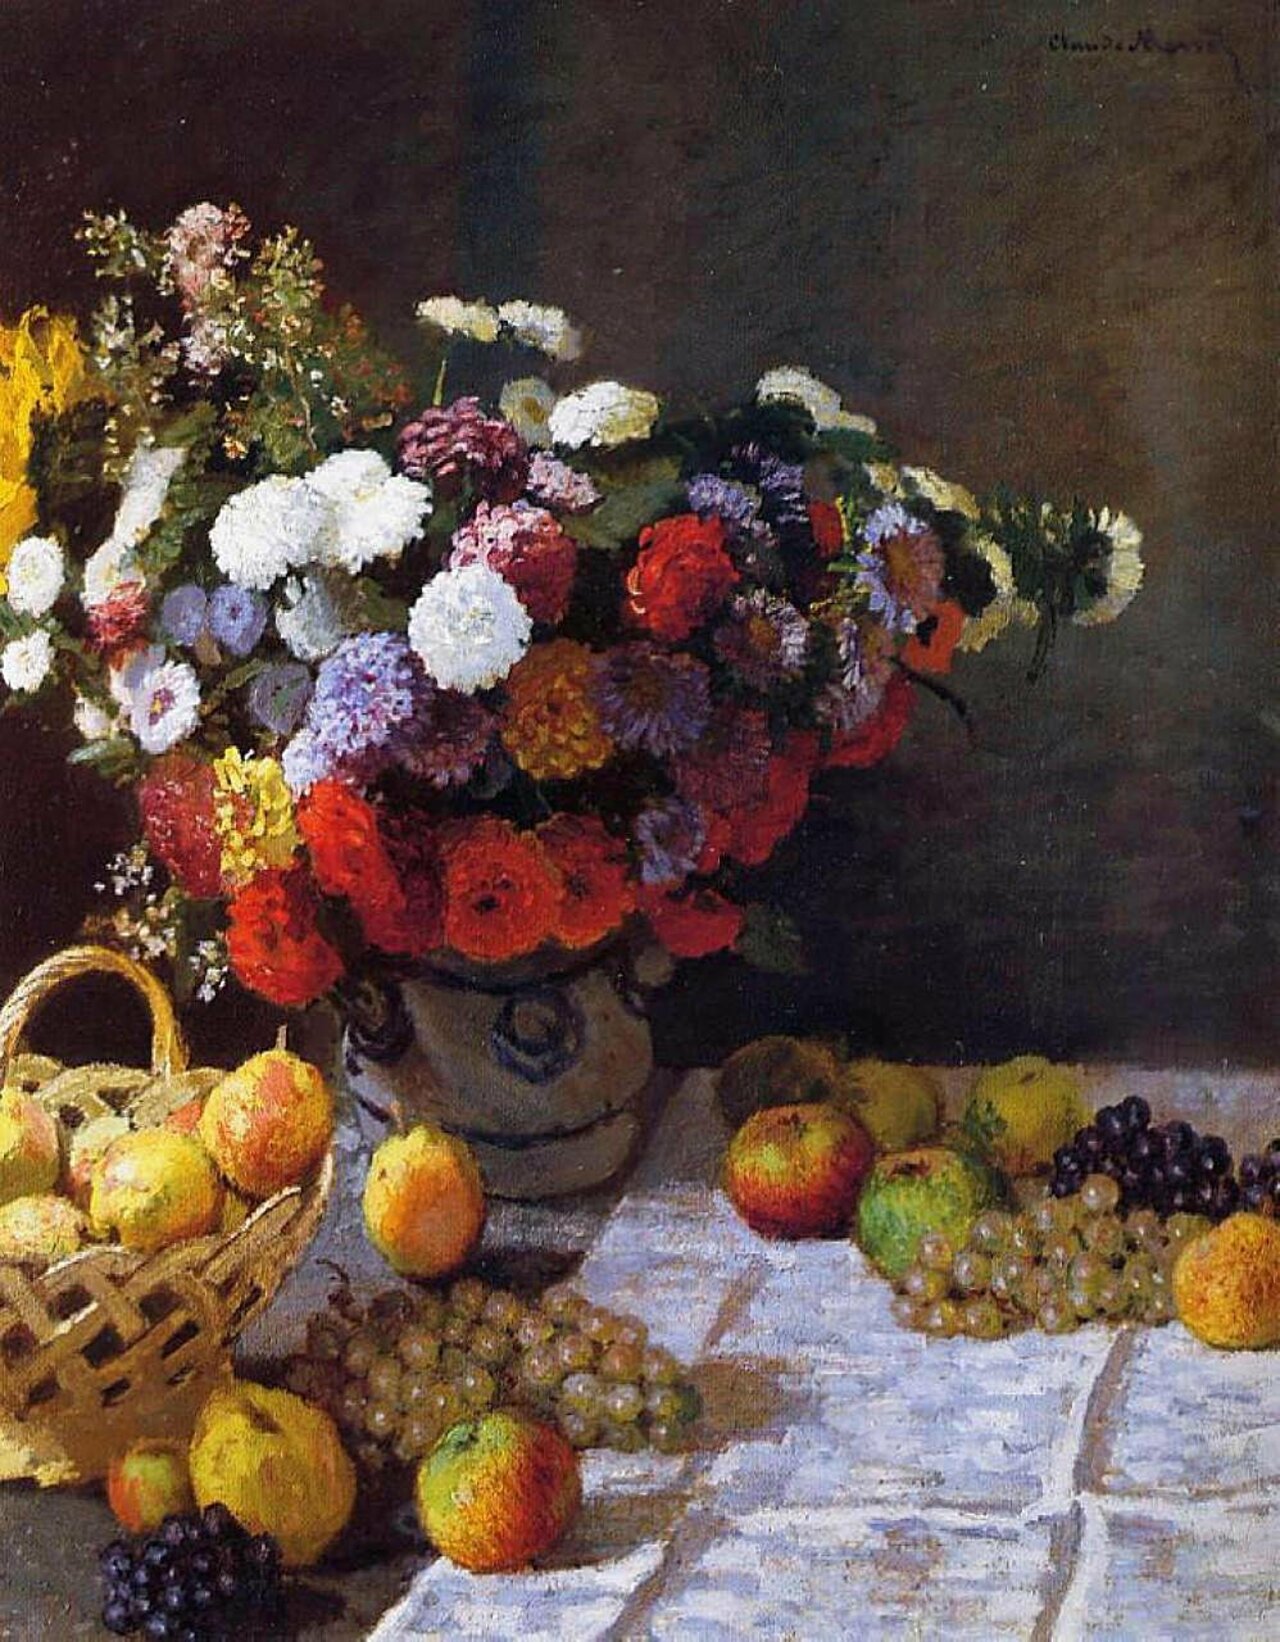 Claude #MONET, "FLOWERS AND FRUITS" 1869 #ilovemonet #art #artwit #twitart #painting #artist #followart https://t.co/uxKMY87jsO